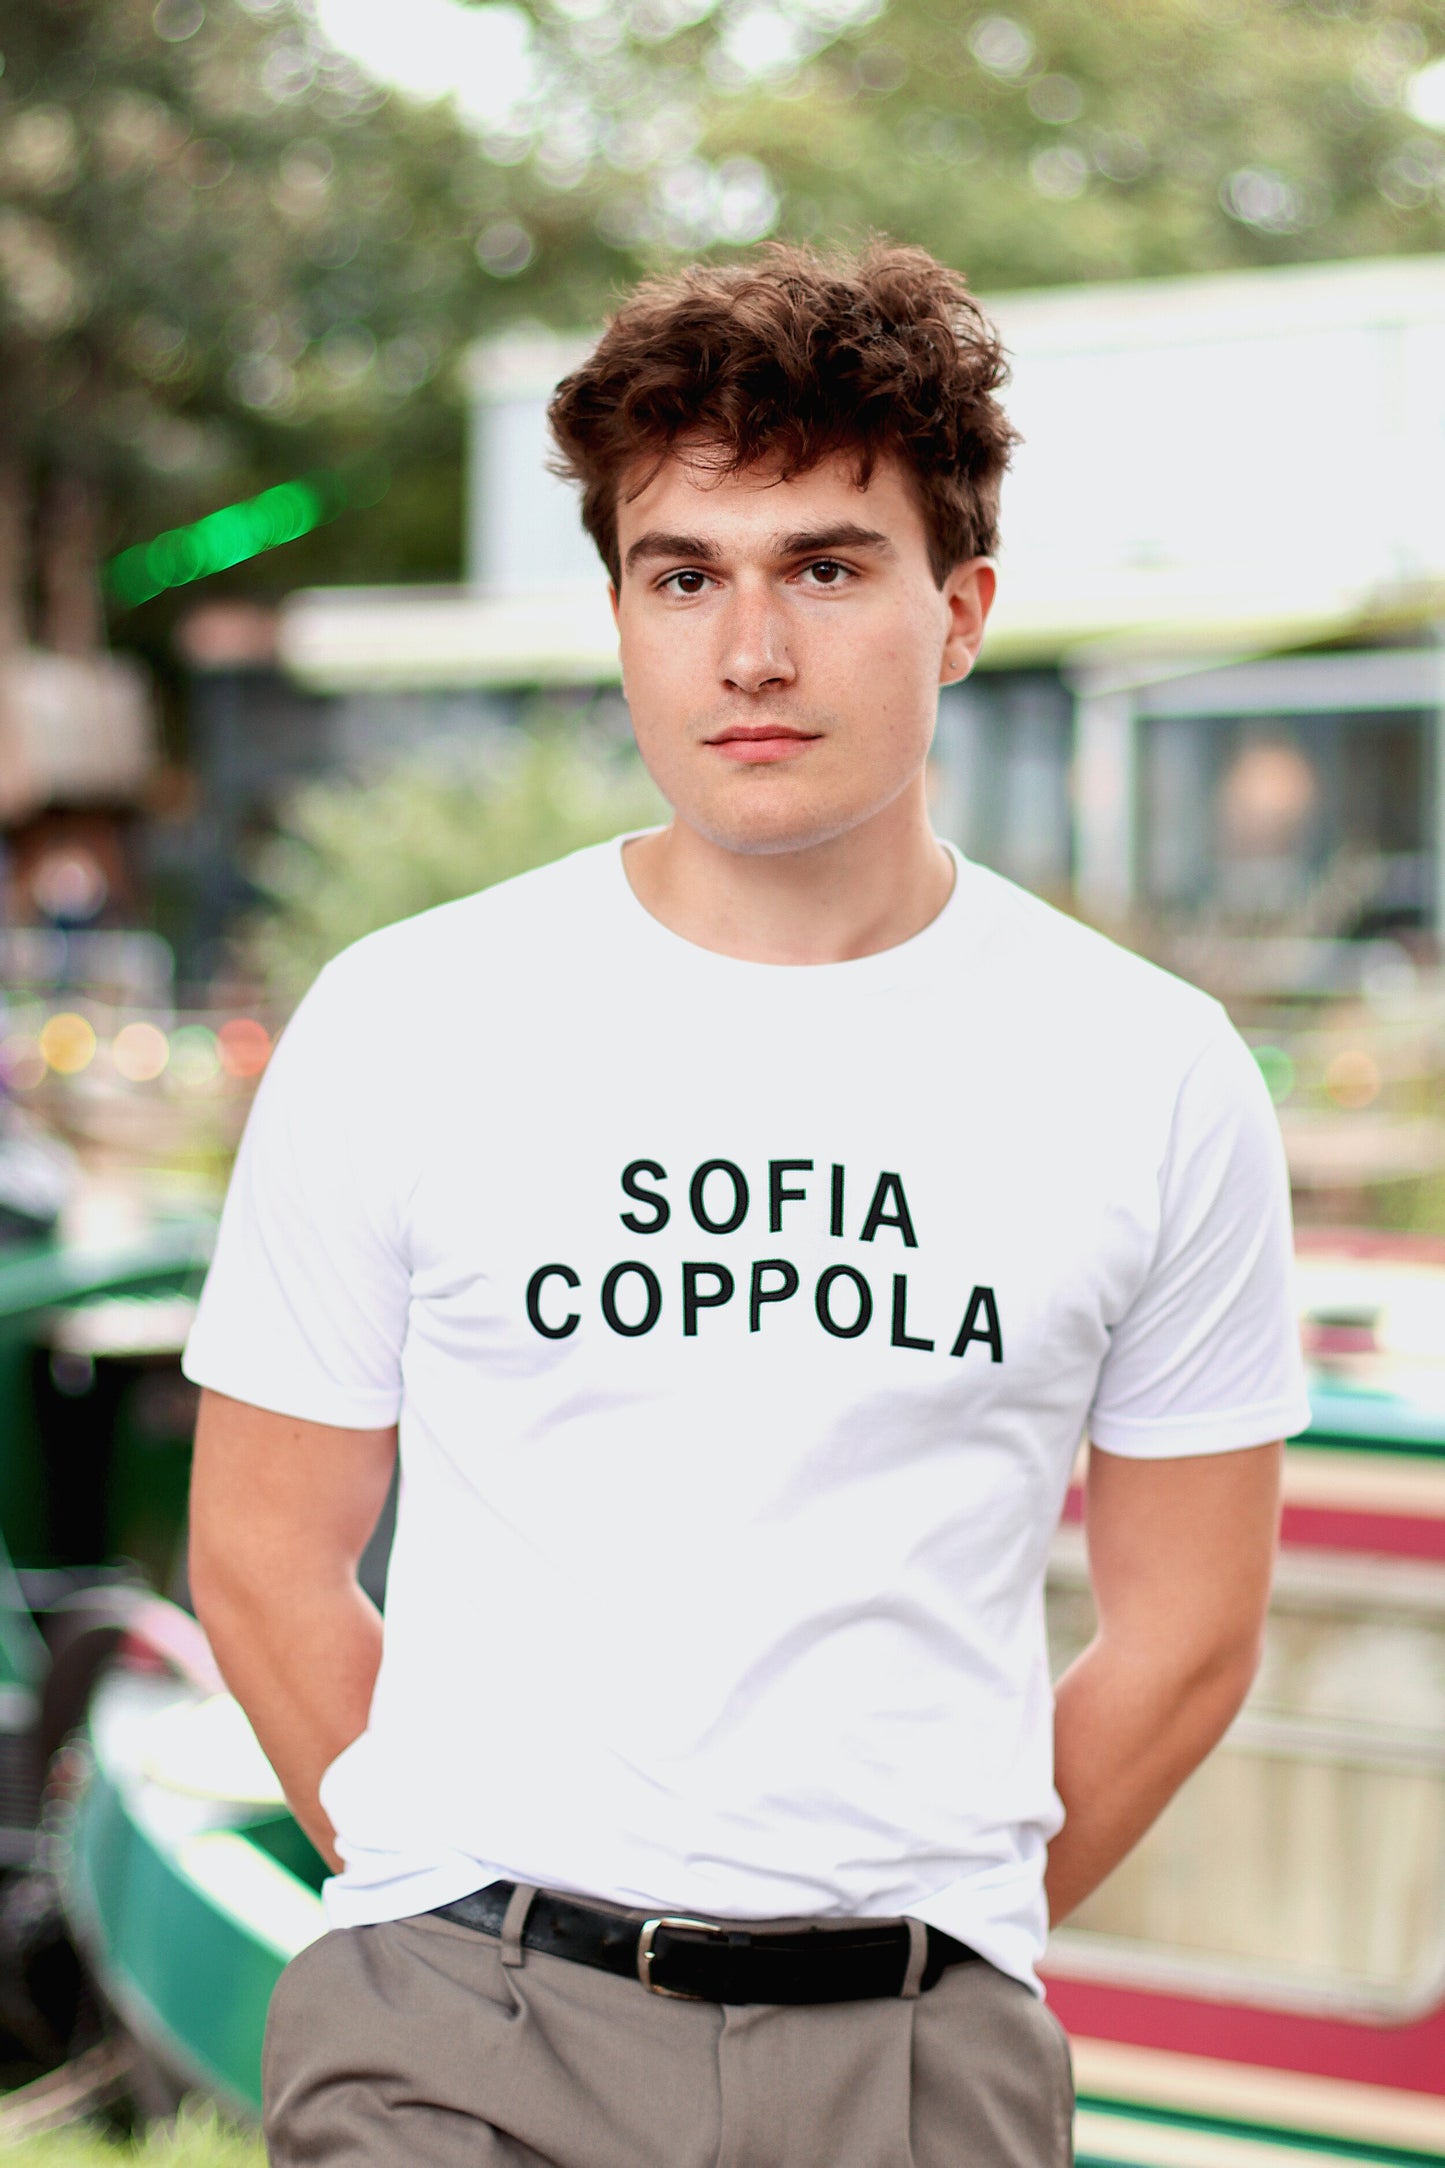 SOFIA COPPOLA